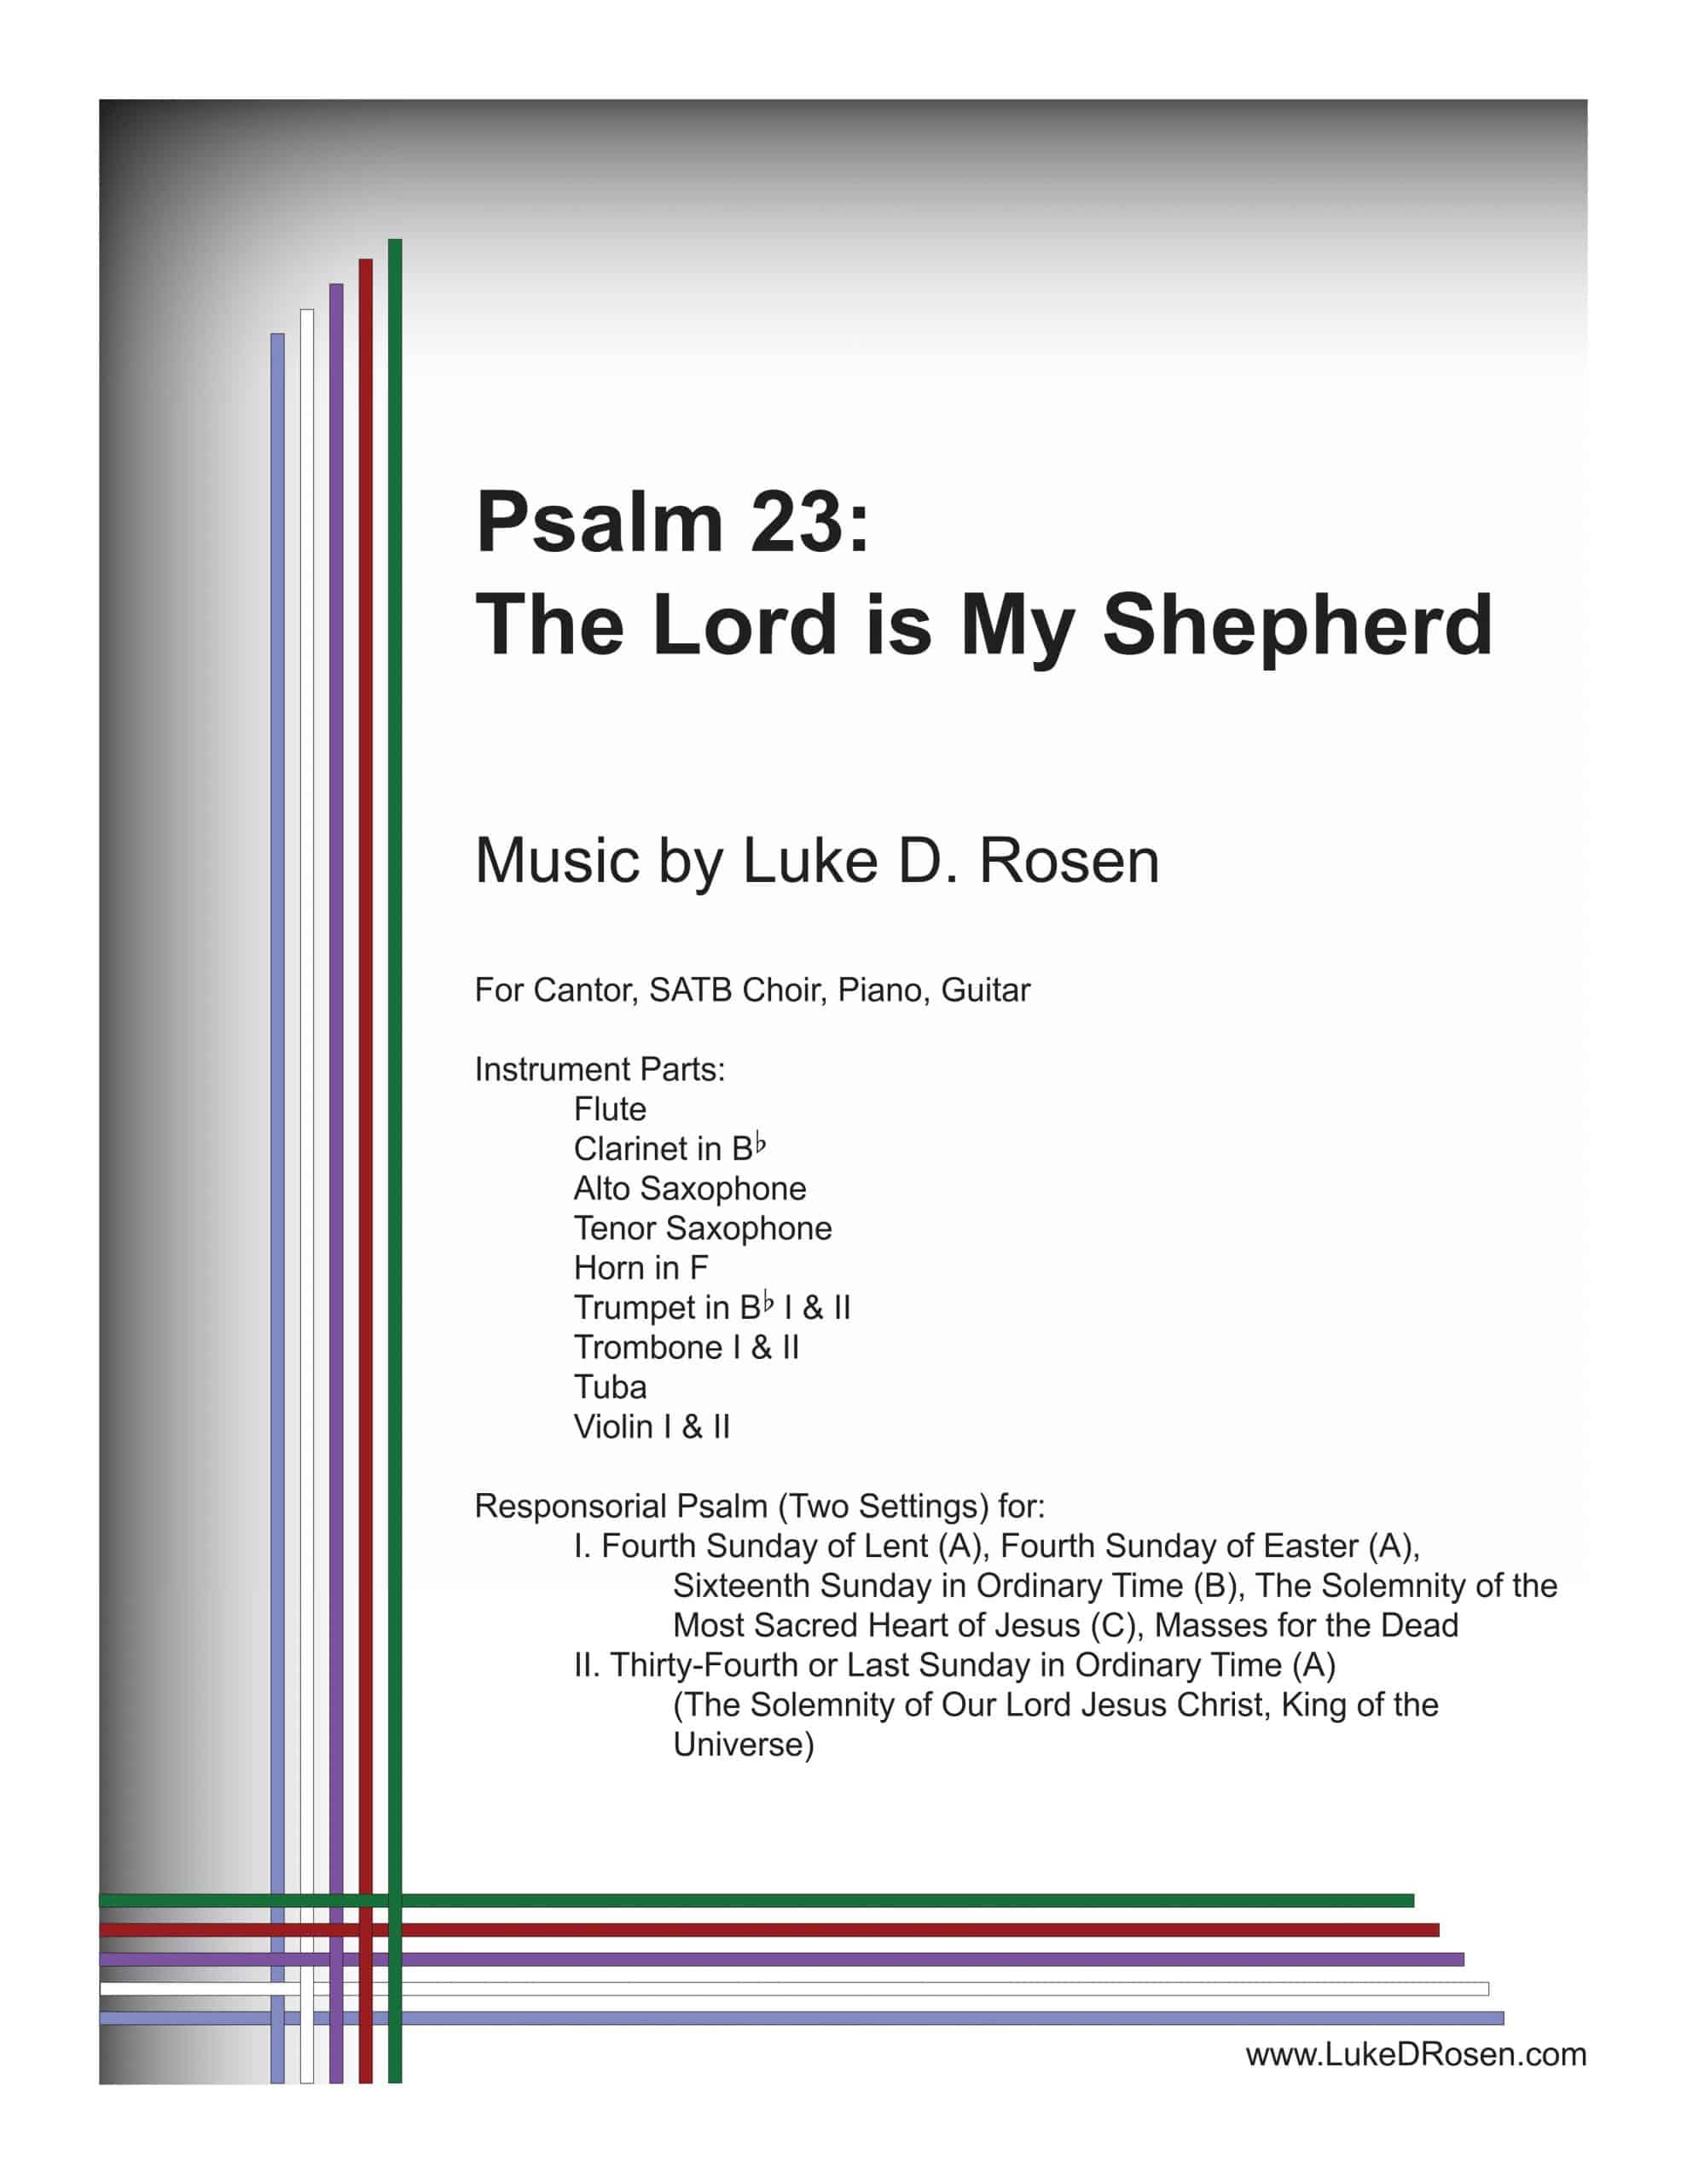 Psalm 23 – The Lord is My Shepherd (Rosen)